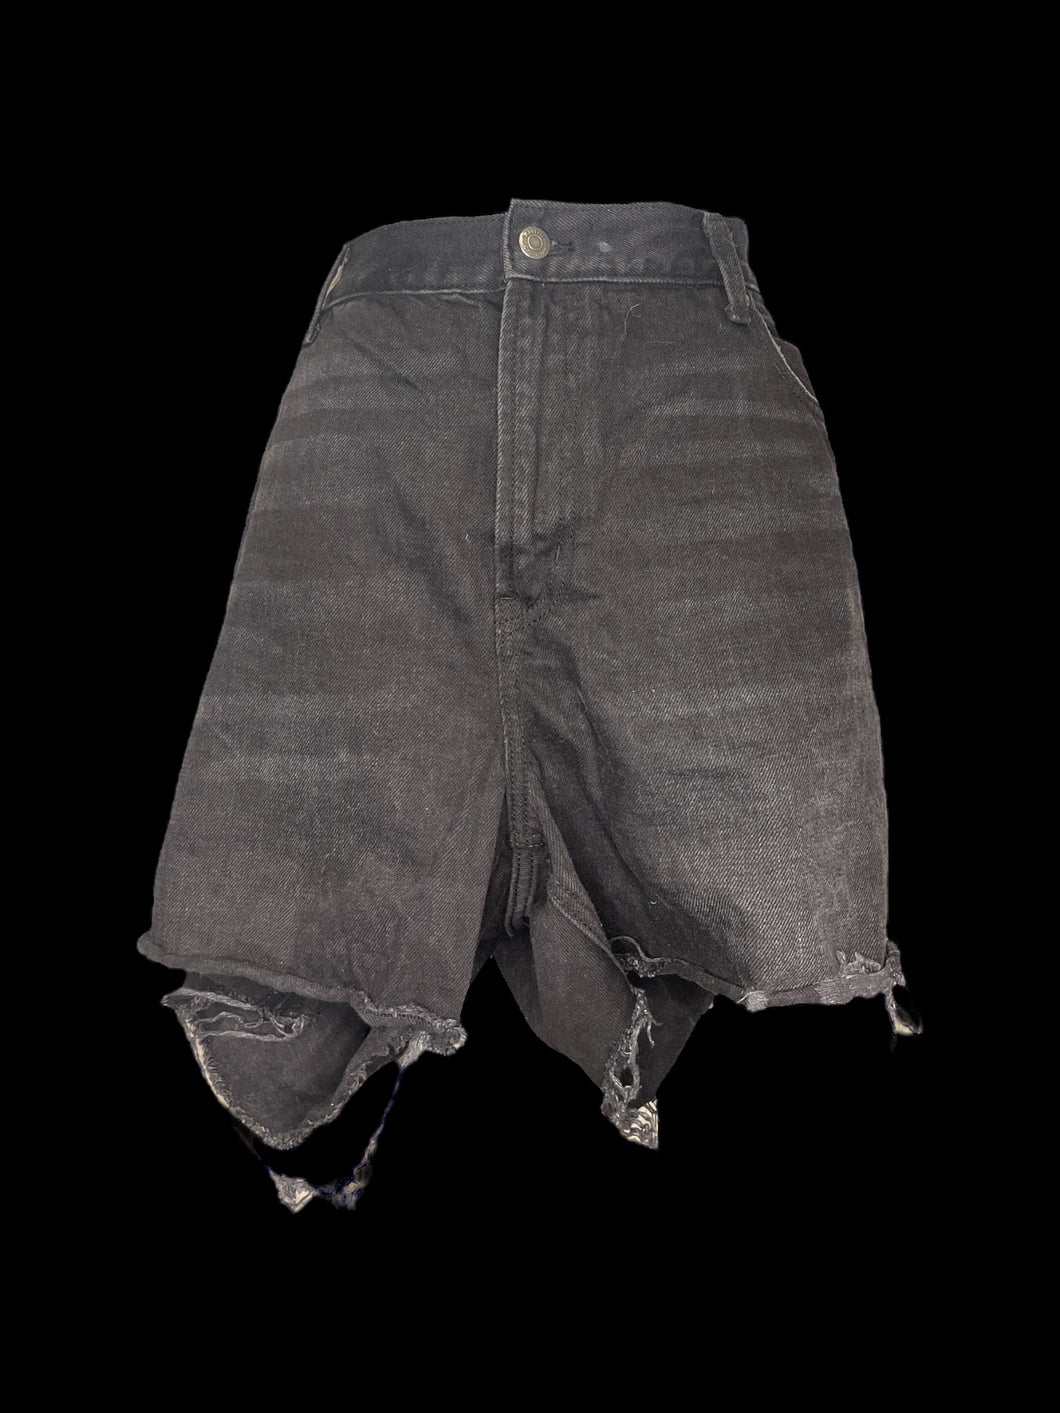 1X Black denim distressed hem high waisted shorts w/ pockets, belt loops, & button/zipper closure